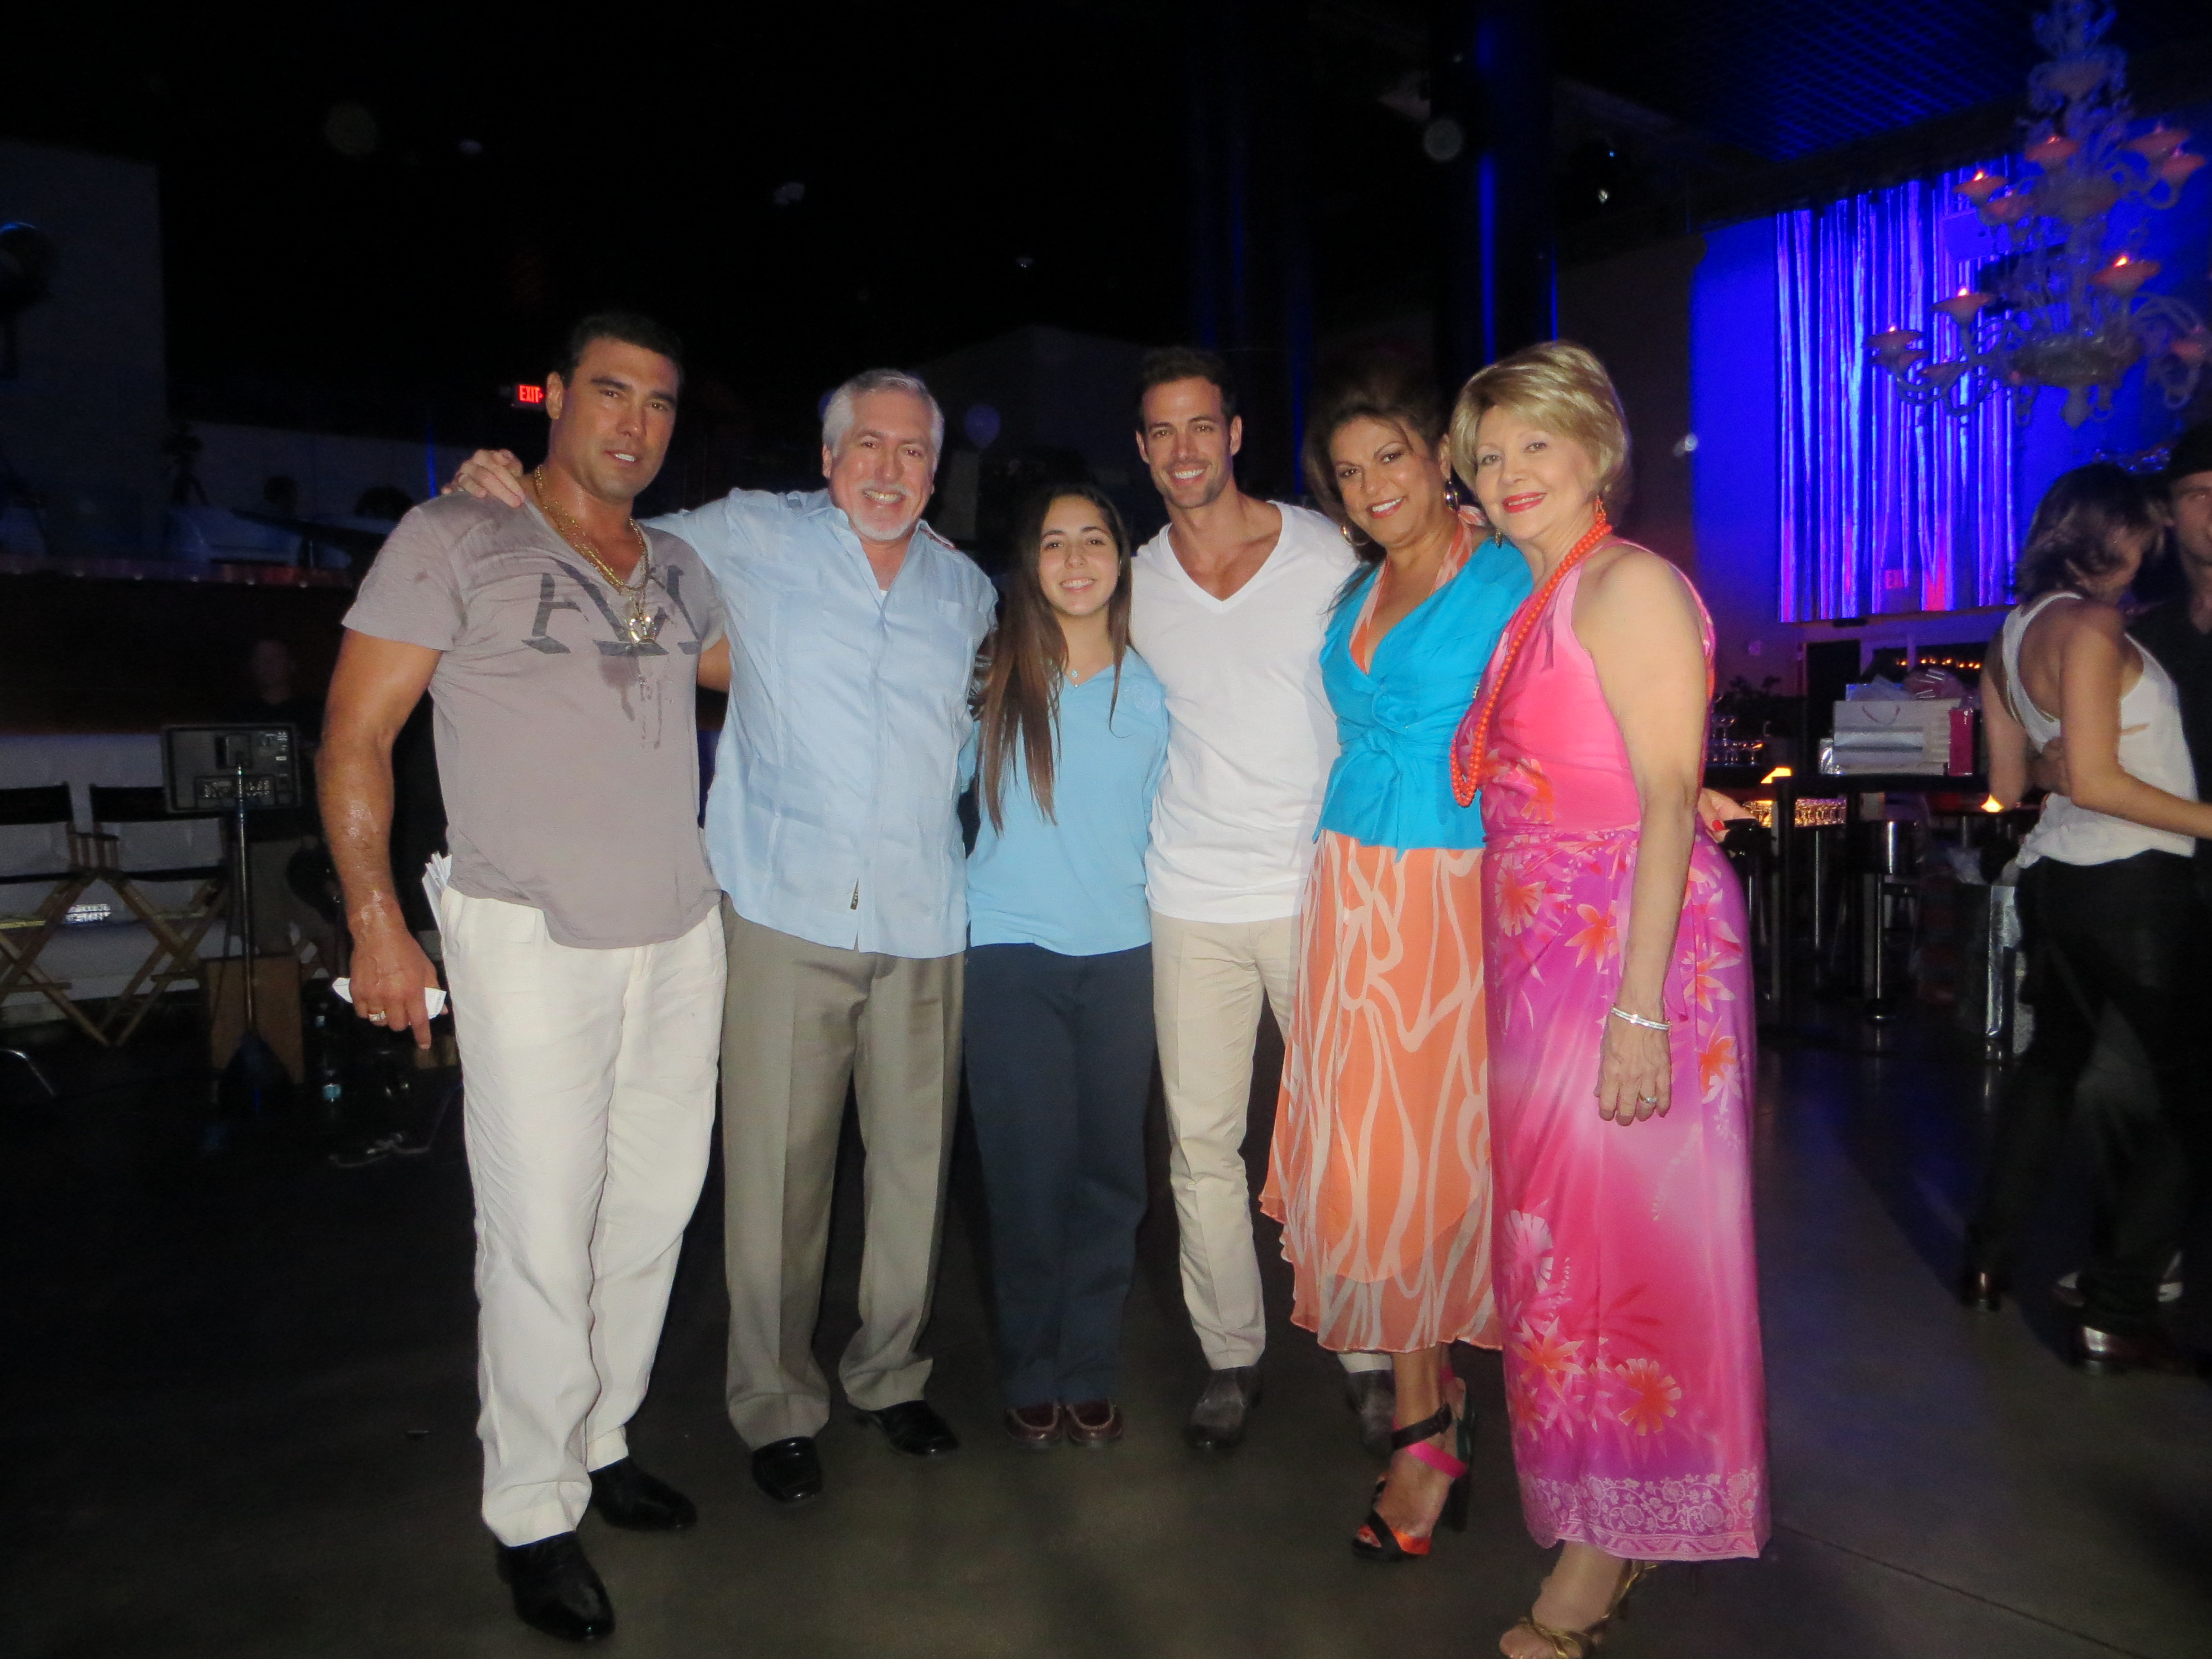 From left to right: Eduardo Yanez, Roberto Escobar, Vanessa Escobar, William Levy, Carmen Lopez and Celia Do Muino, the family at 